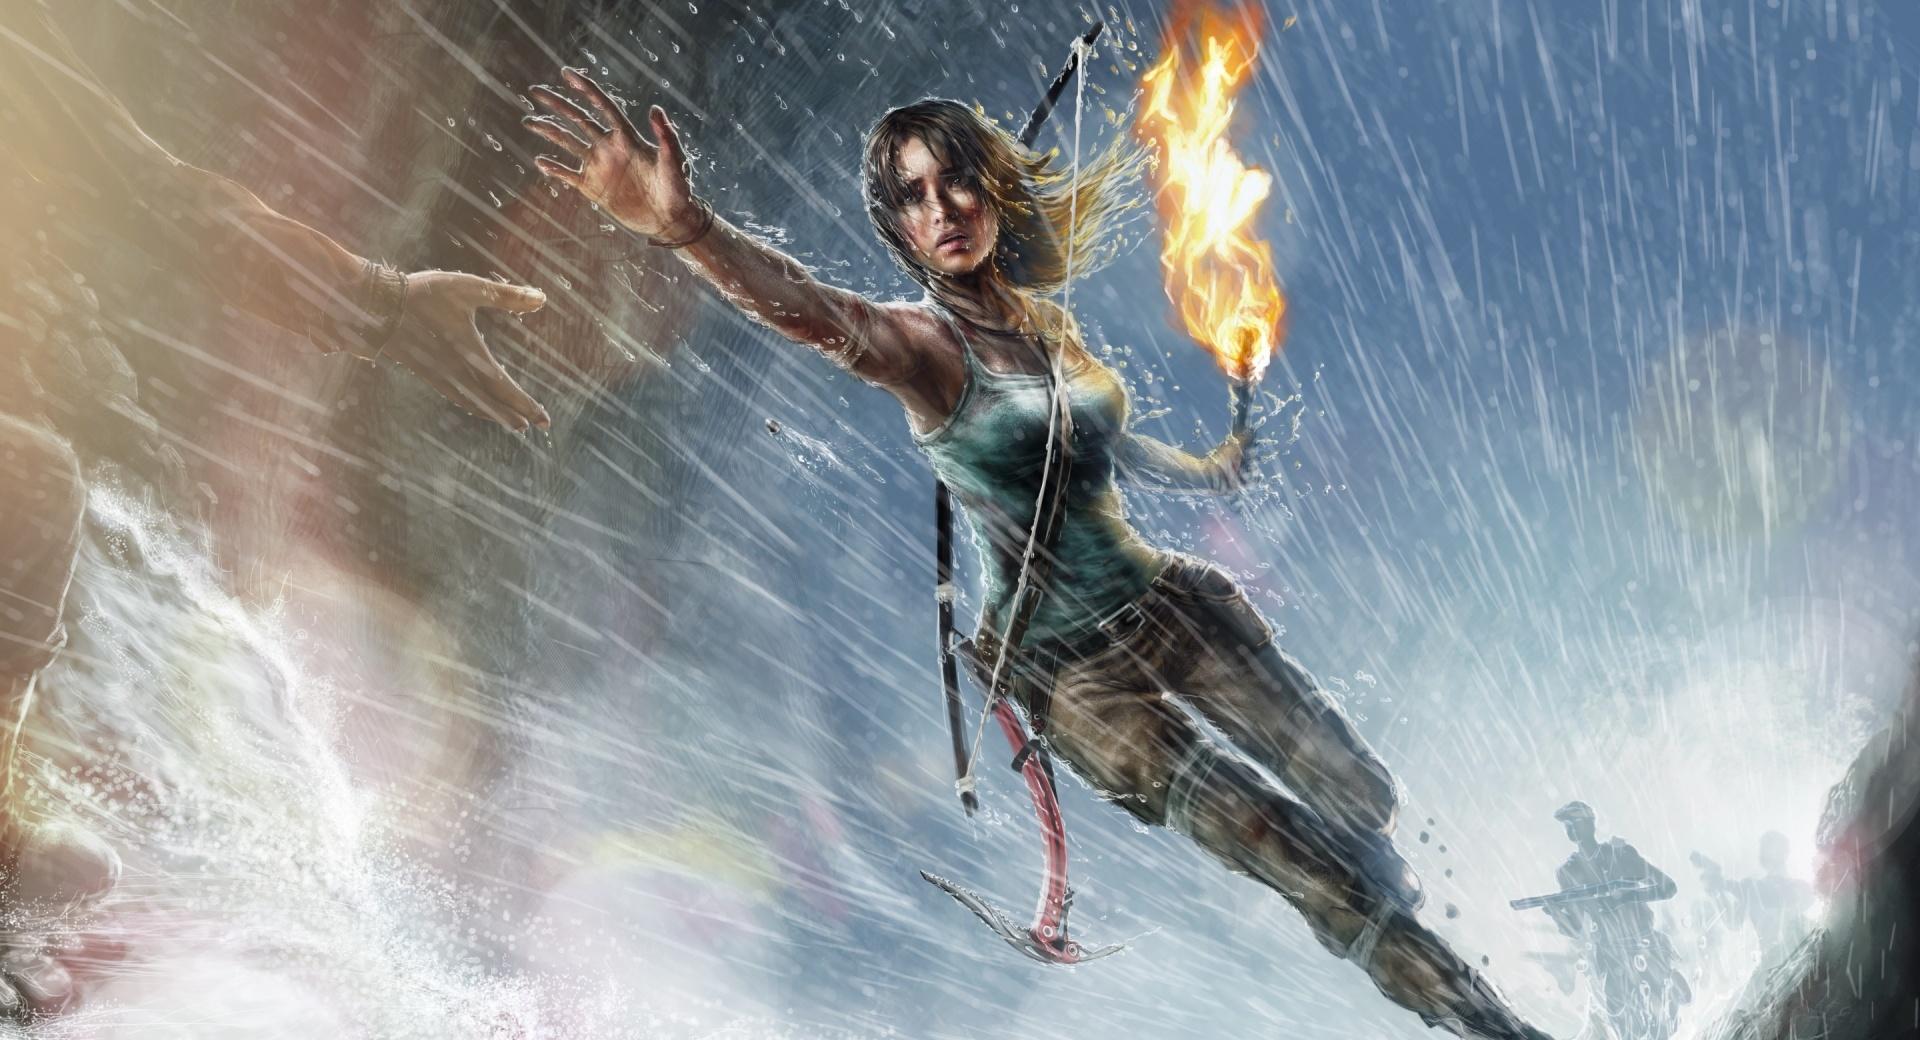 Lara Croft Game Rain at 1600 x 1200 size wallpapers HD quality